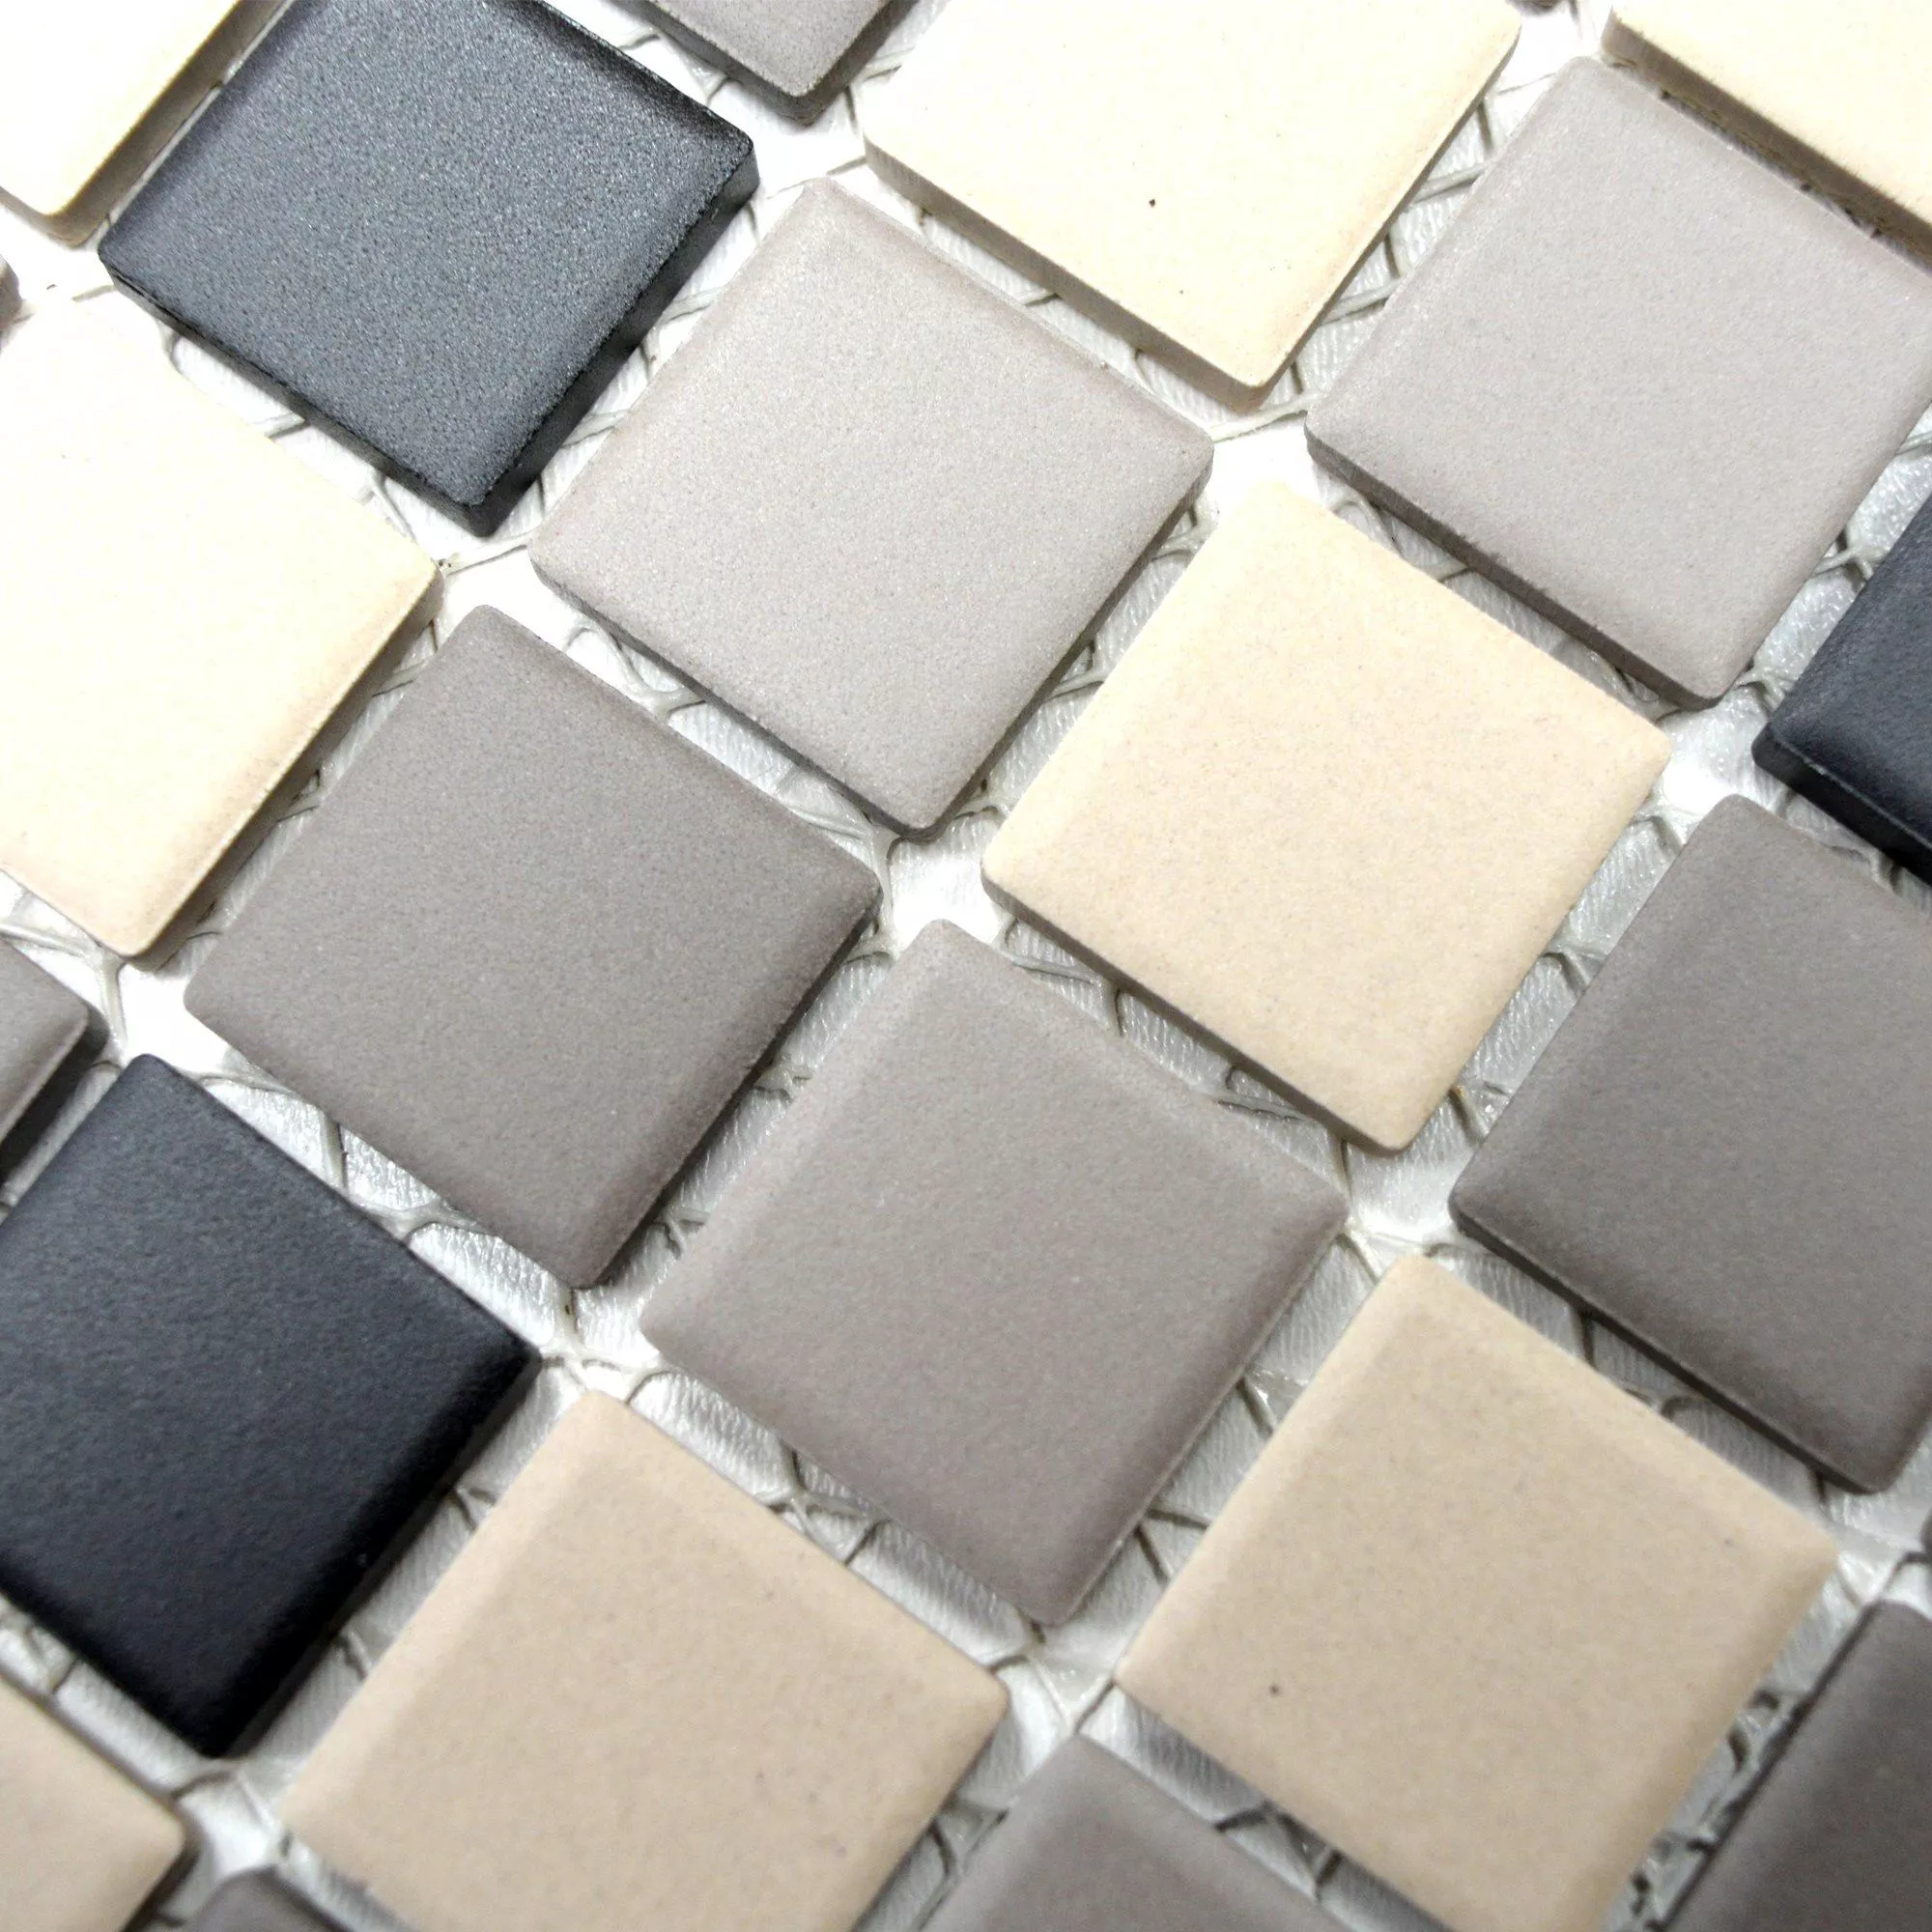 Ceramic Mosaic Miranda Non-Slip Grey Beige Unglazed Q25